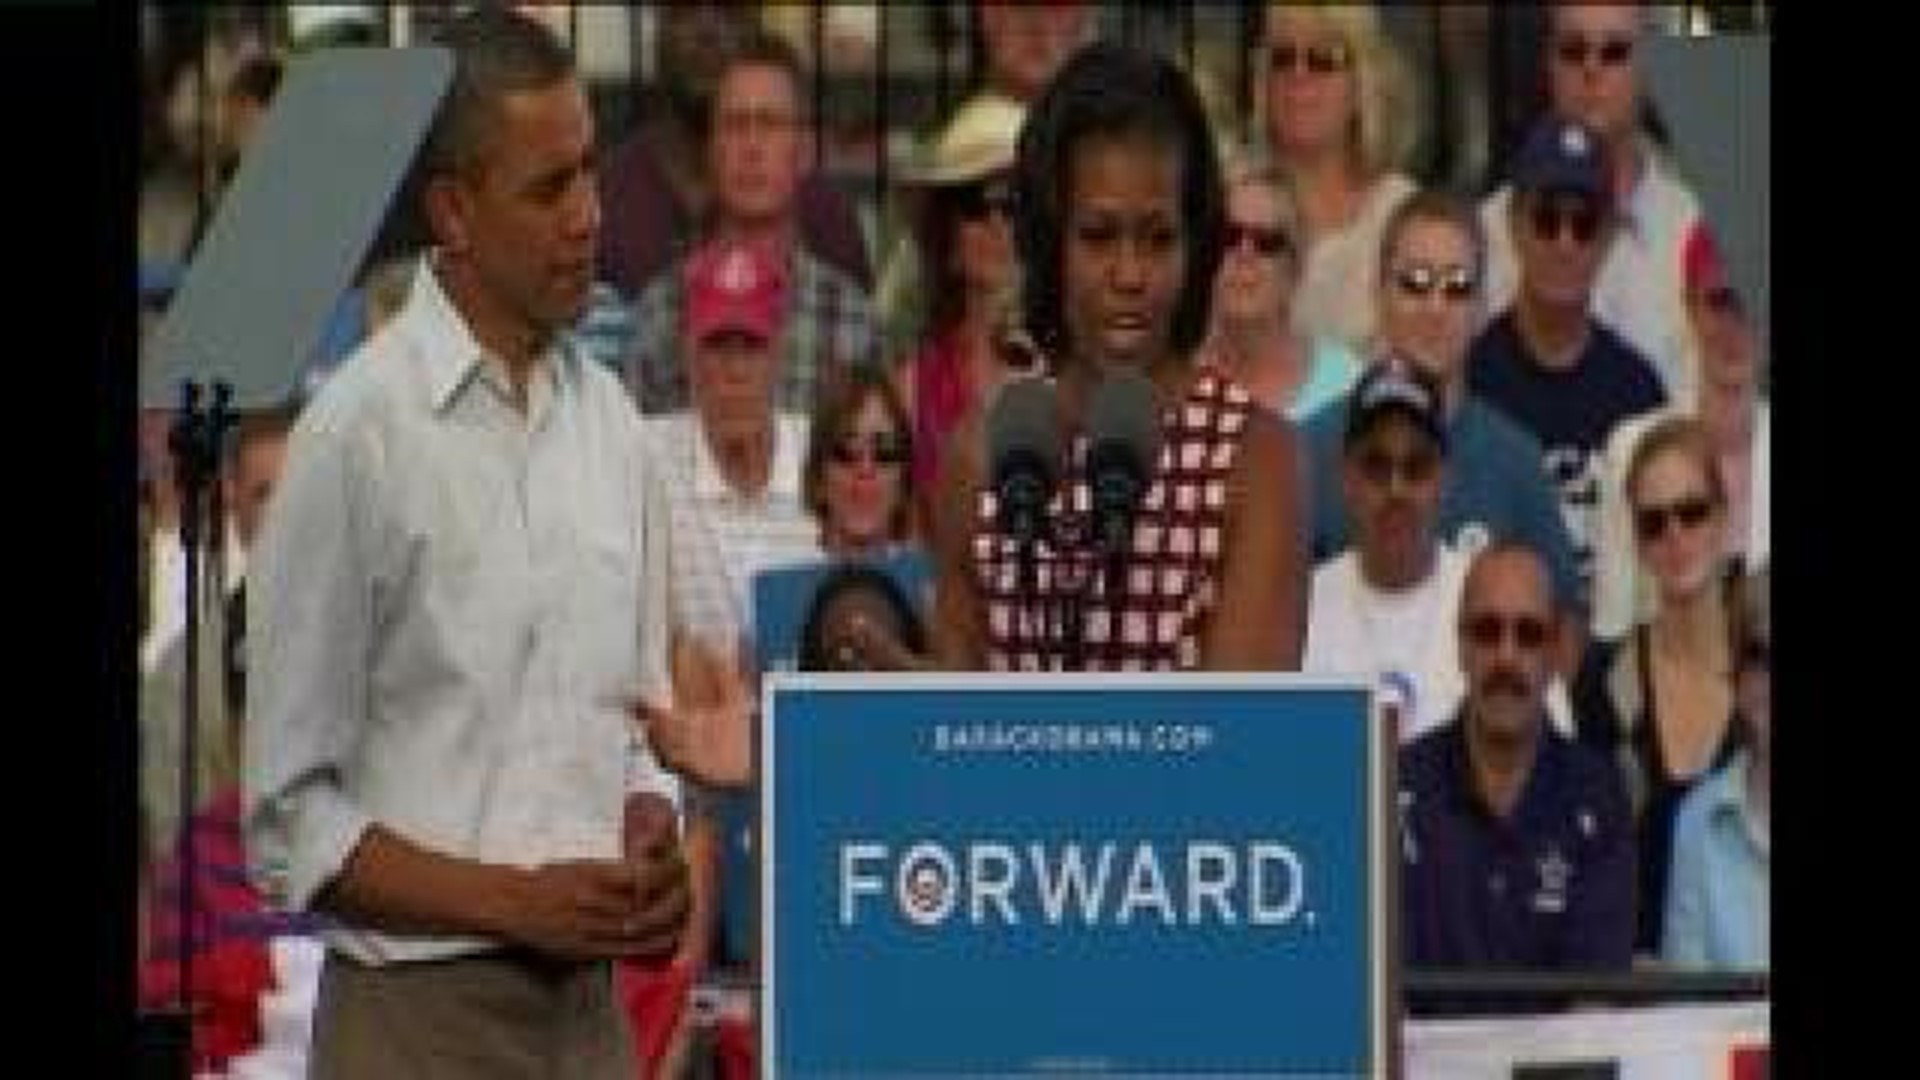 Michelle Obama speaks in Davenport 8-15-12